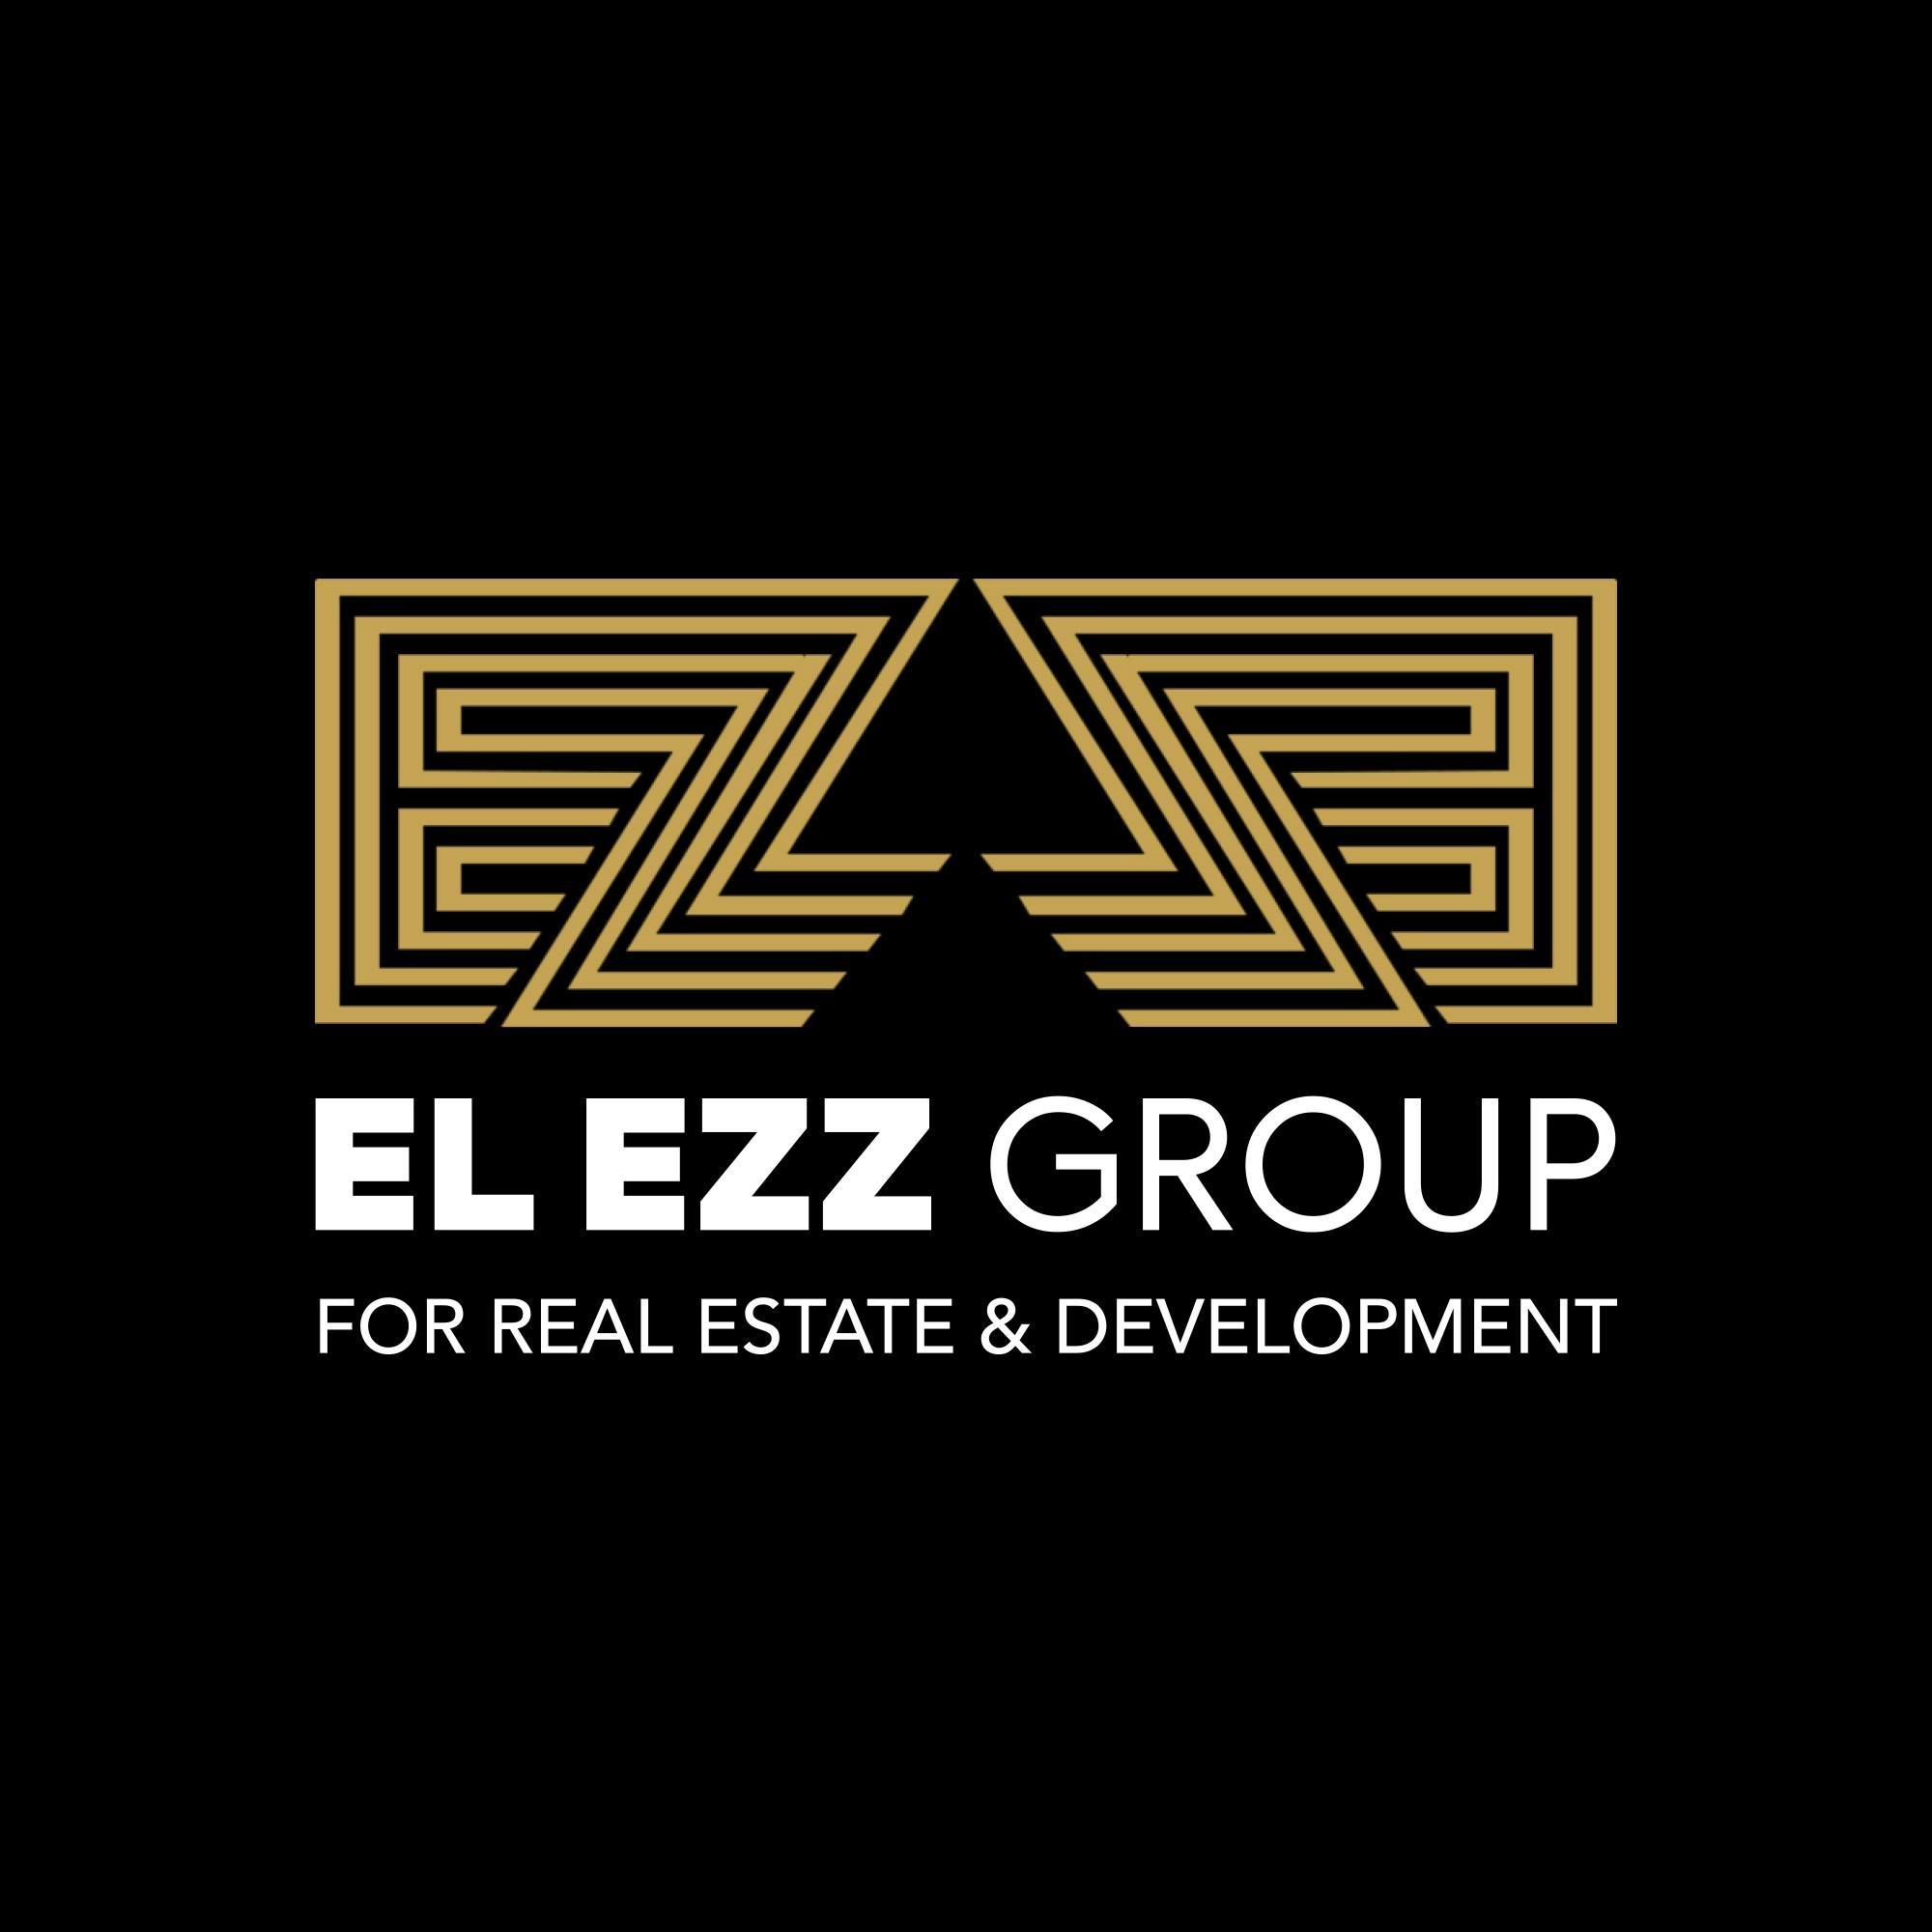 El-Ezz Group